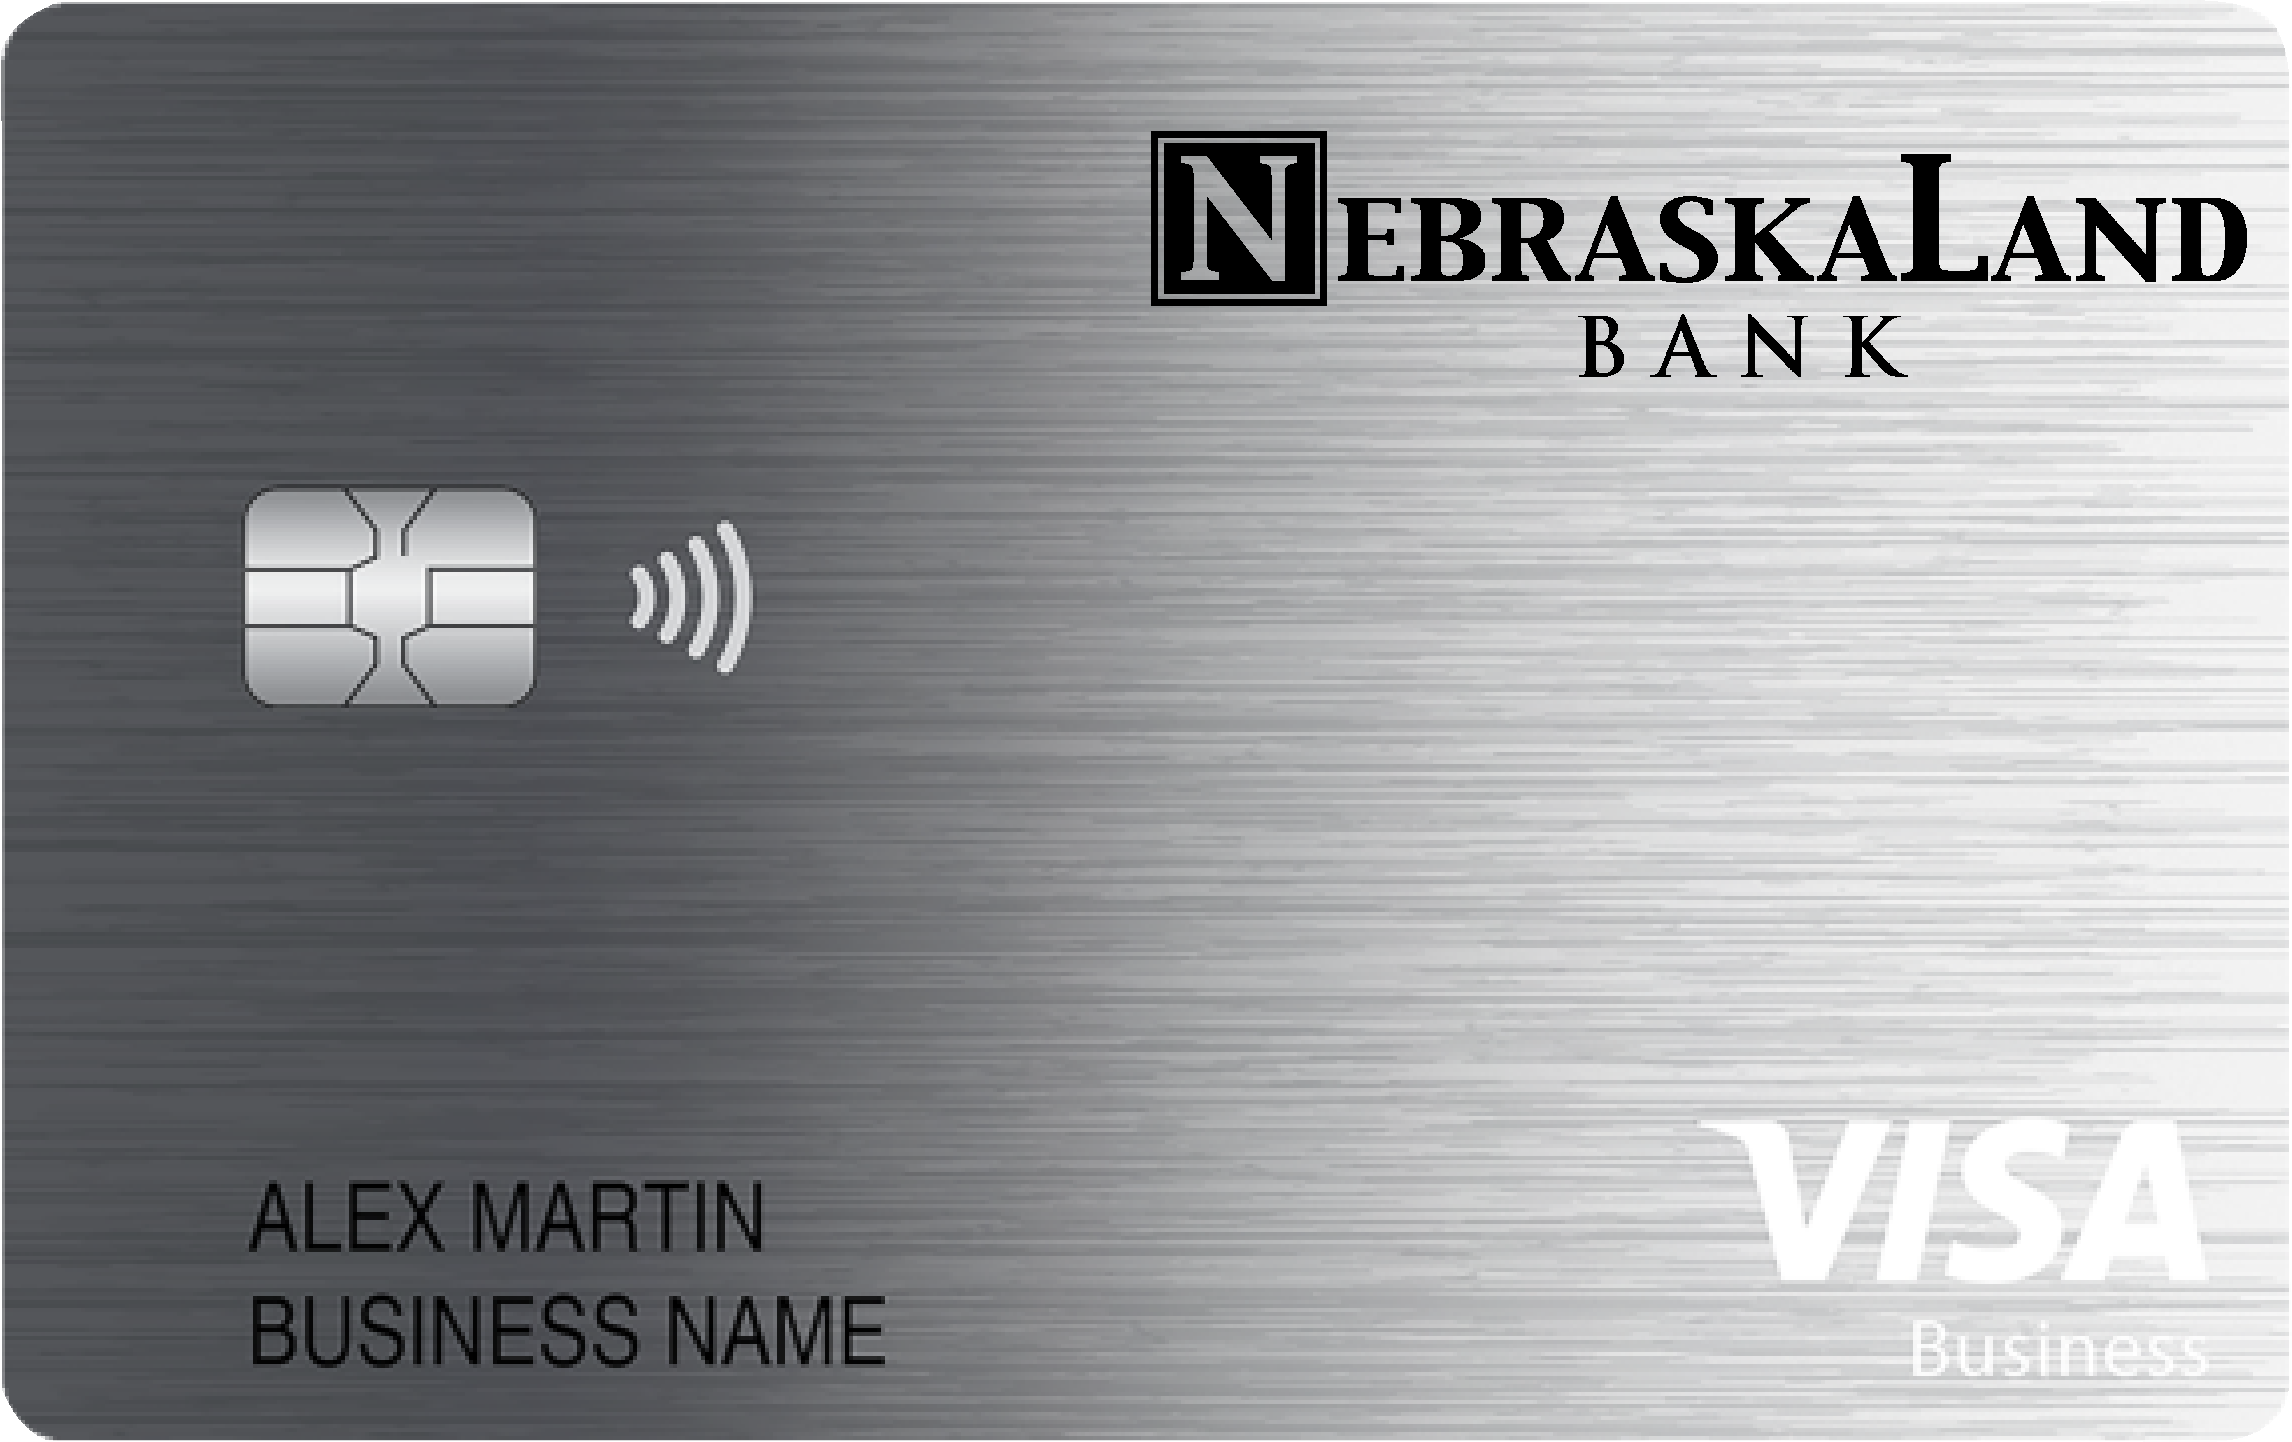 Nebraskaland Bank Business Cash Preferred Card